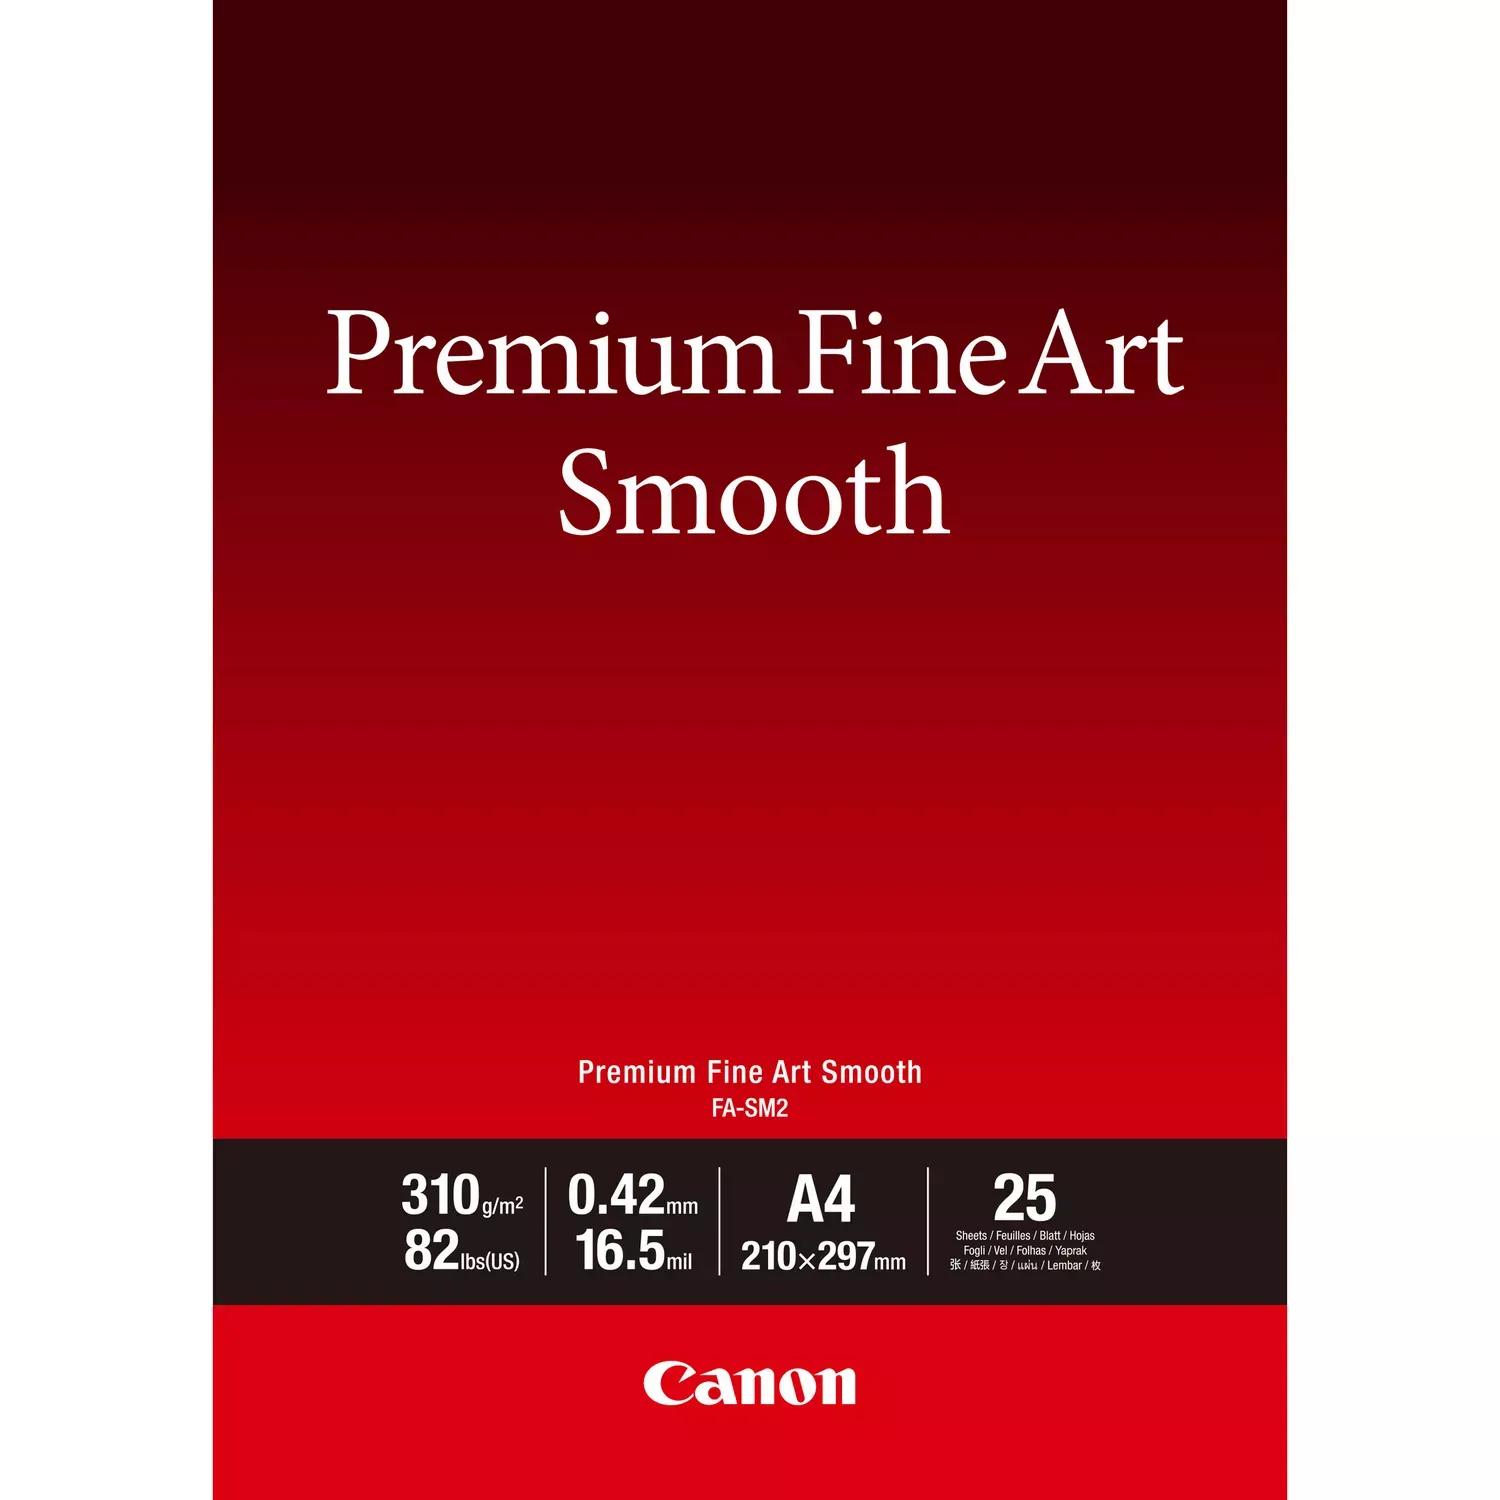 Vente CANON FA-SM2 A4 25Sheets Premium Fine Art Smooth au meilleur prix